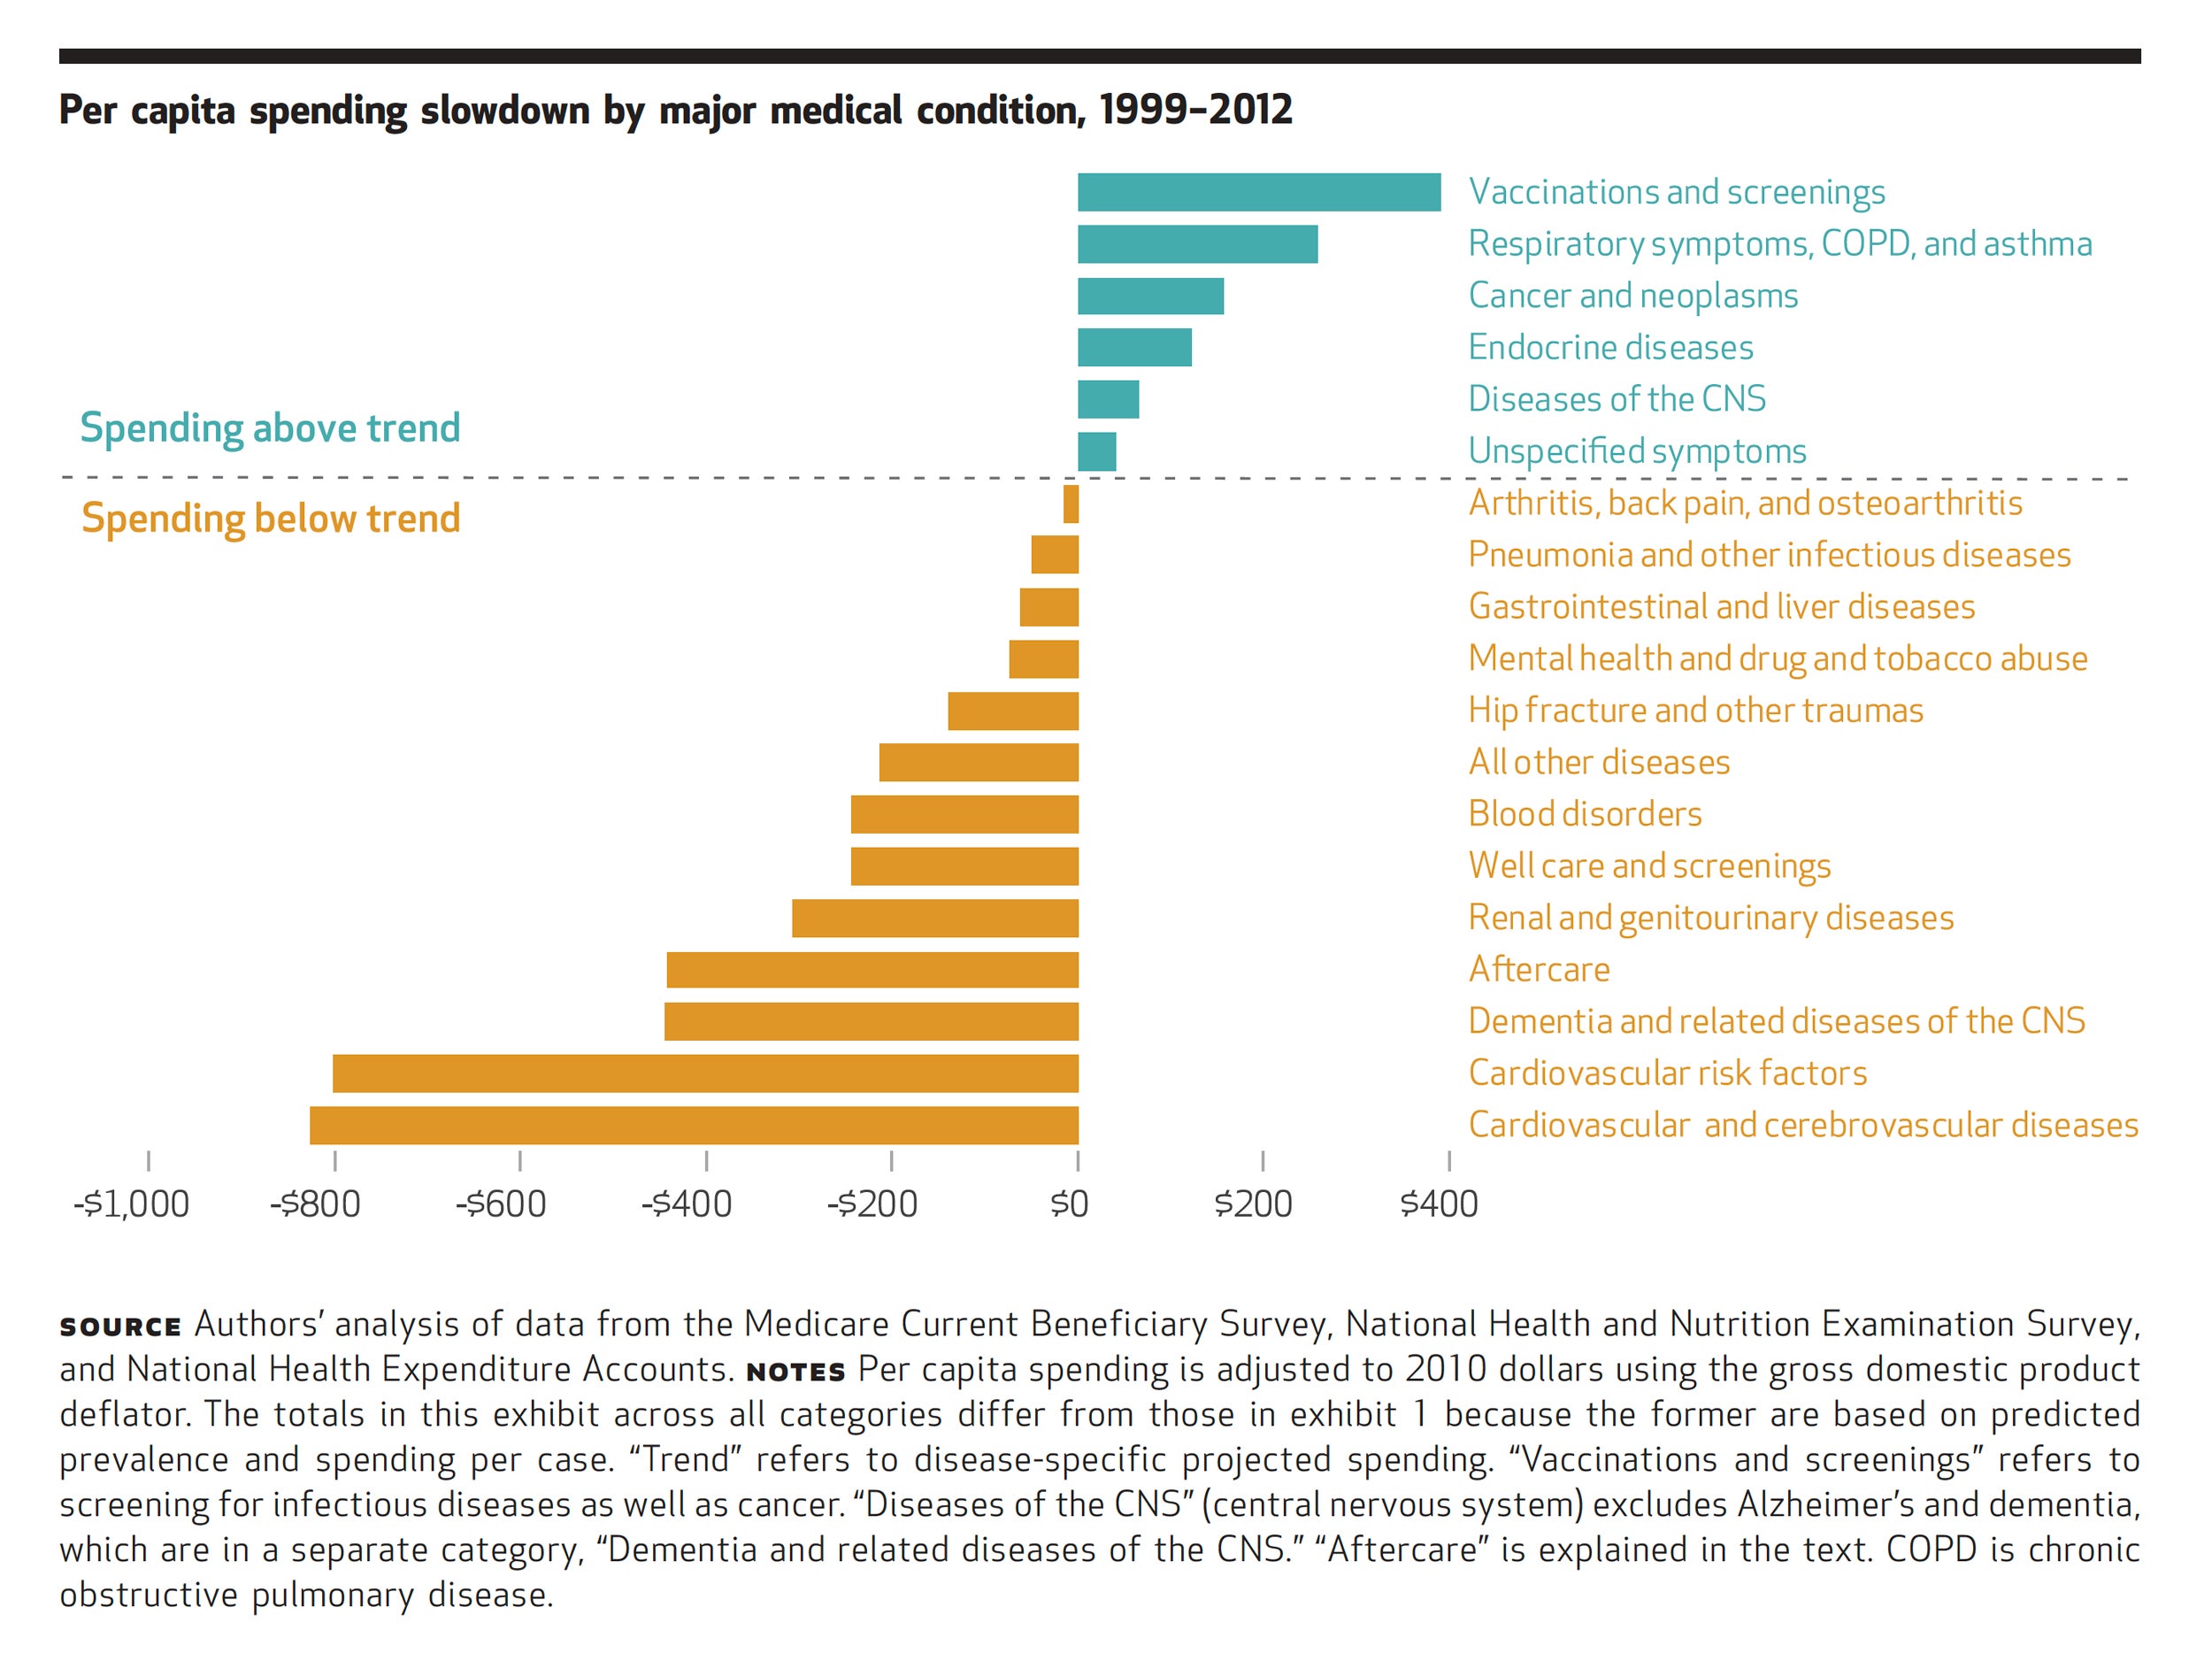 Per Capita Spending Slowdown by Major Medical Condition 1992-2012